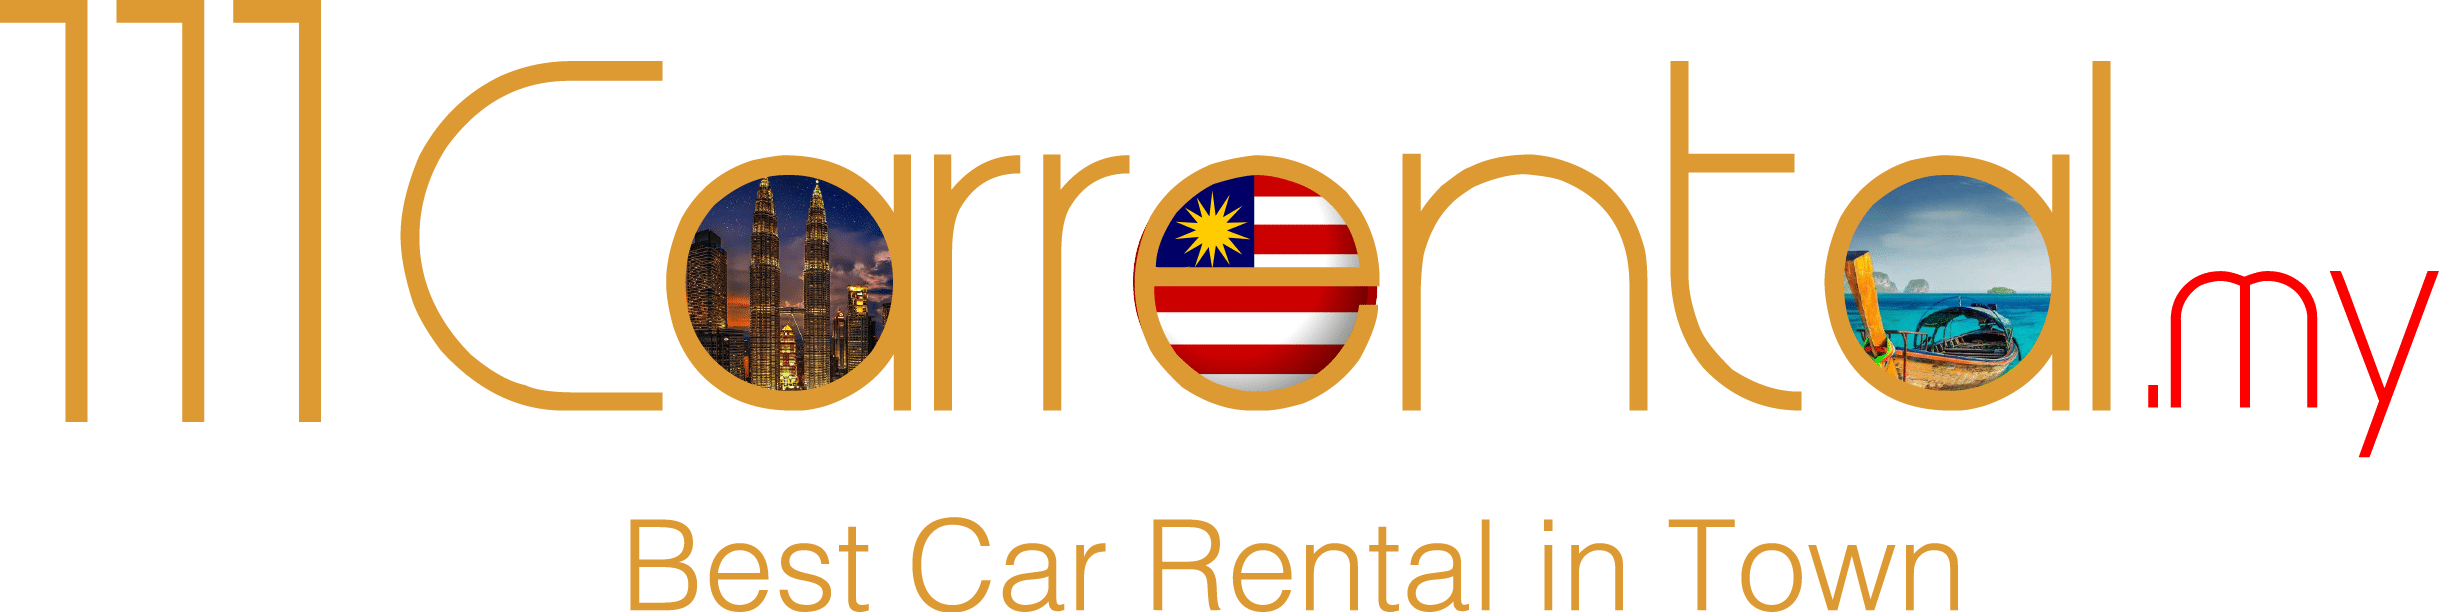 111 Car Rental | Small cars - 111 Car Rental